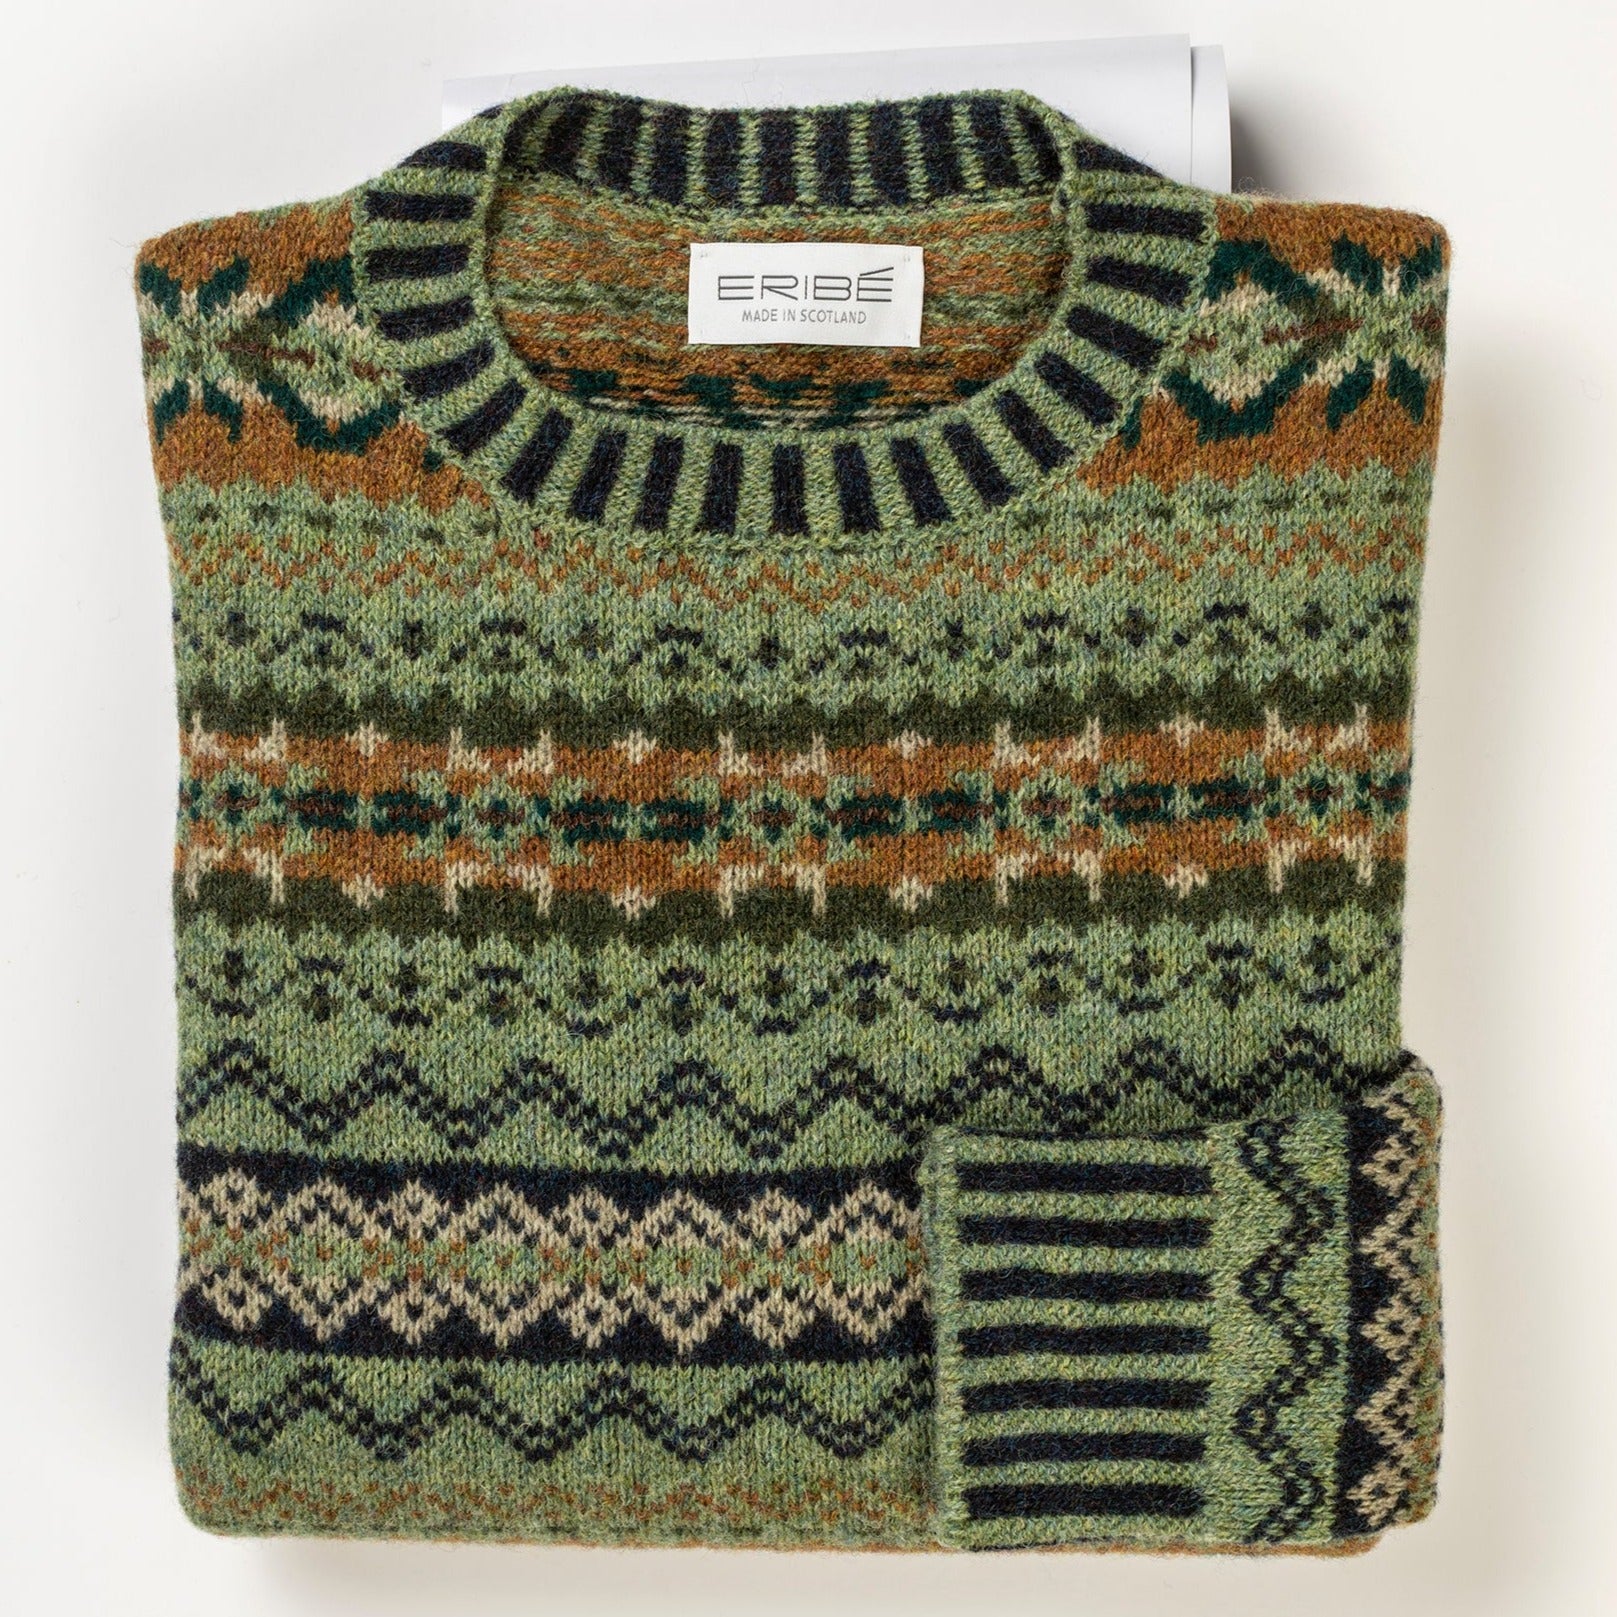 Iona Craft Shop - Scottish Knitwear, Iona Wool, Greenstone jewellery..